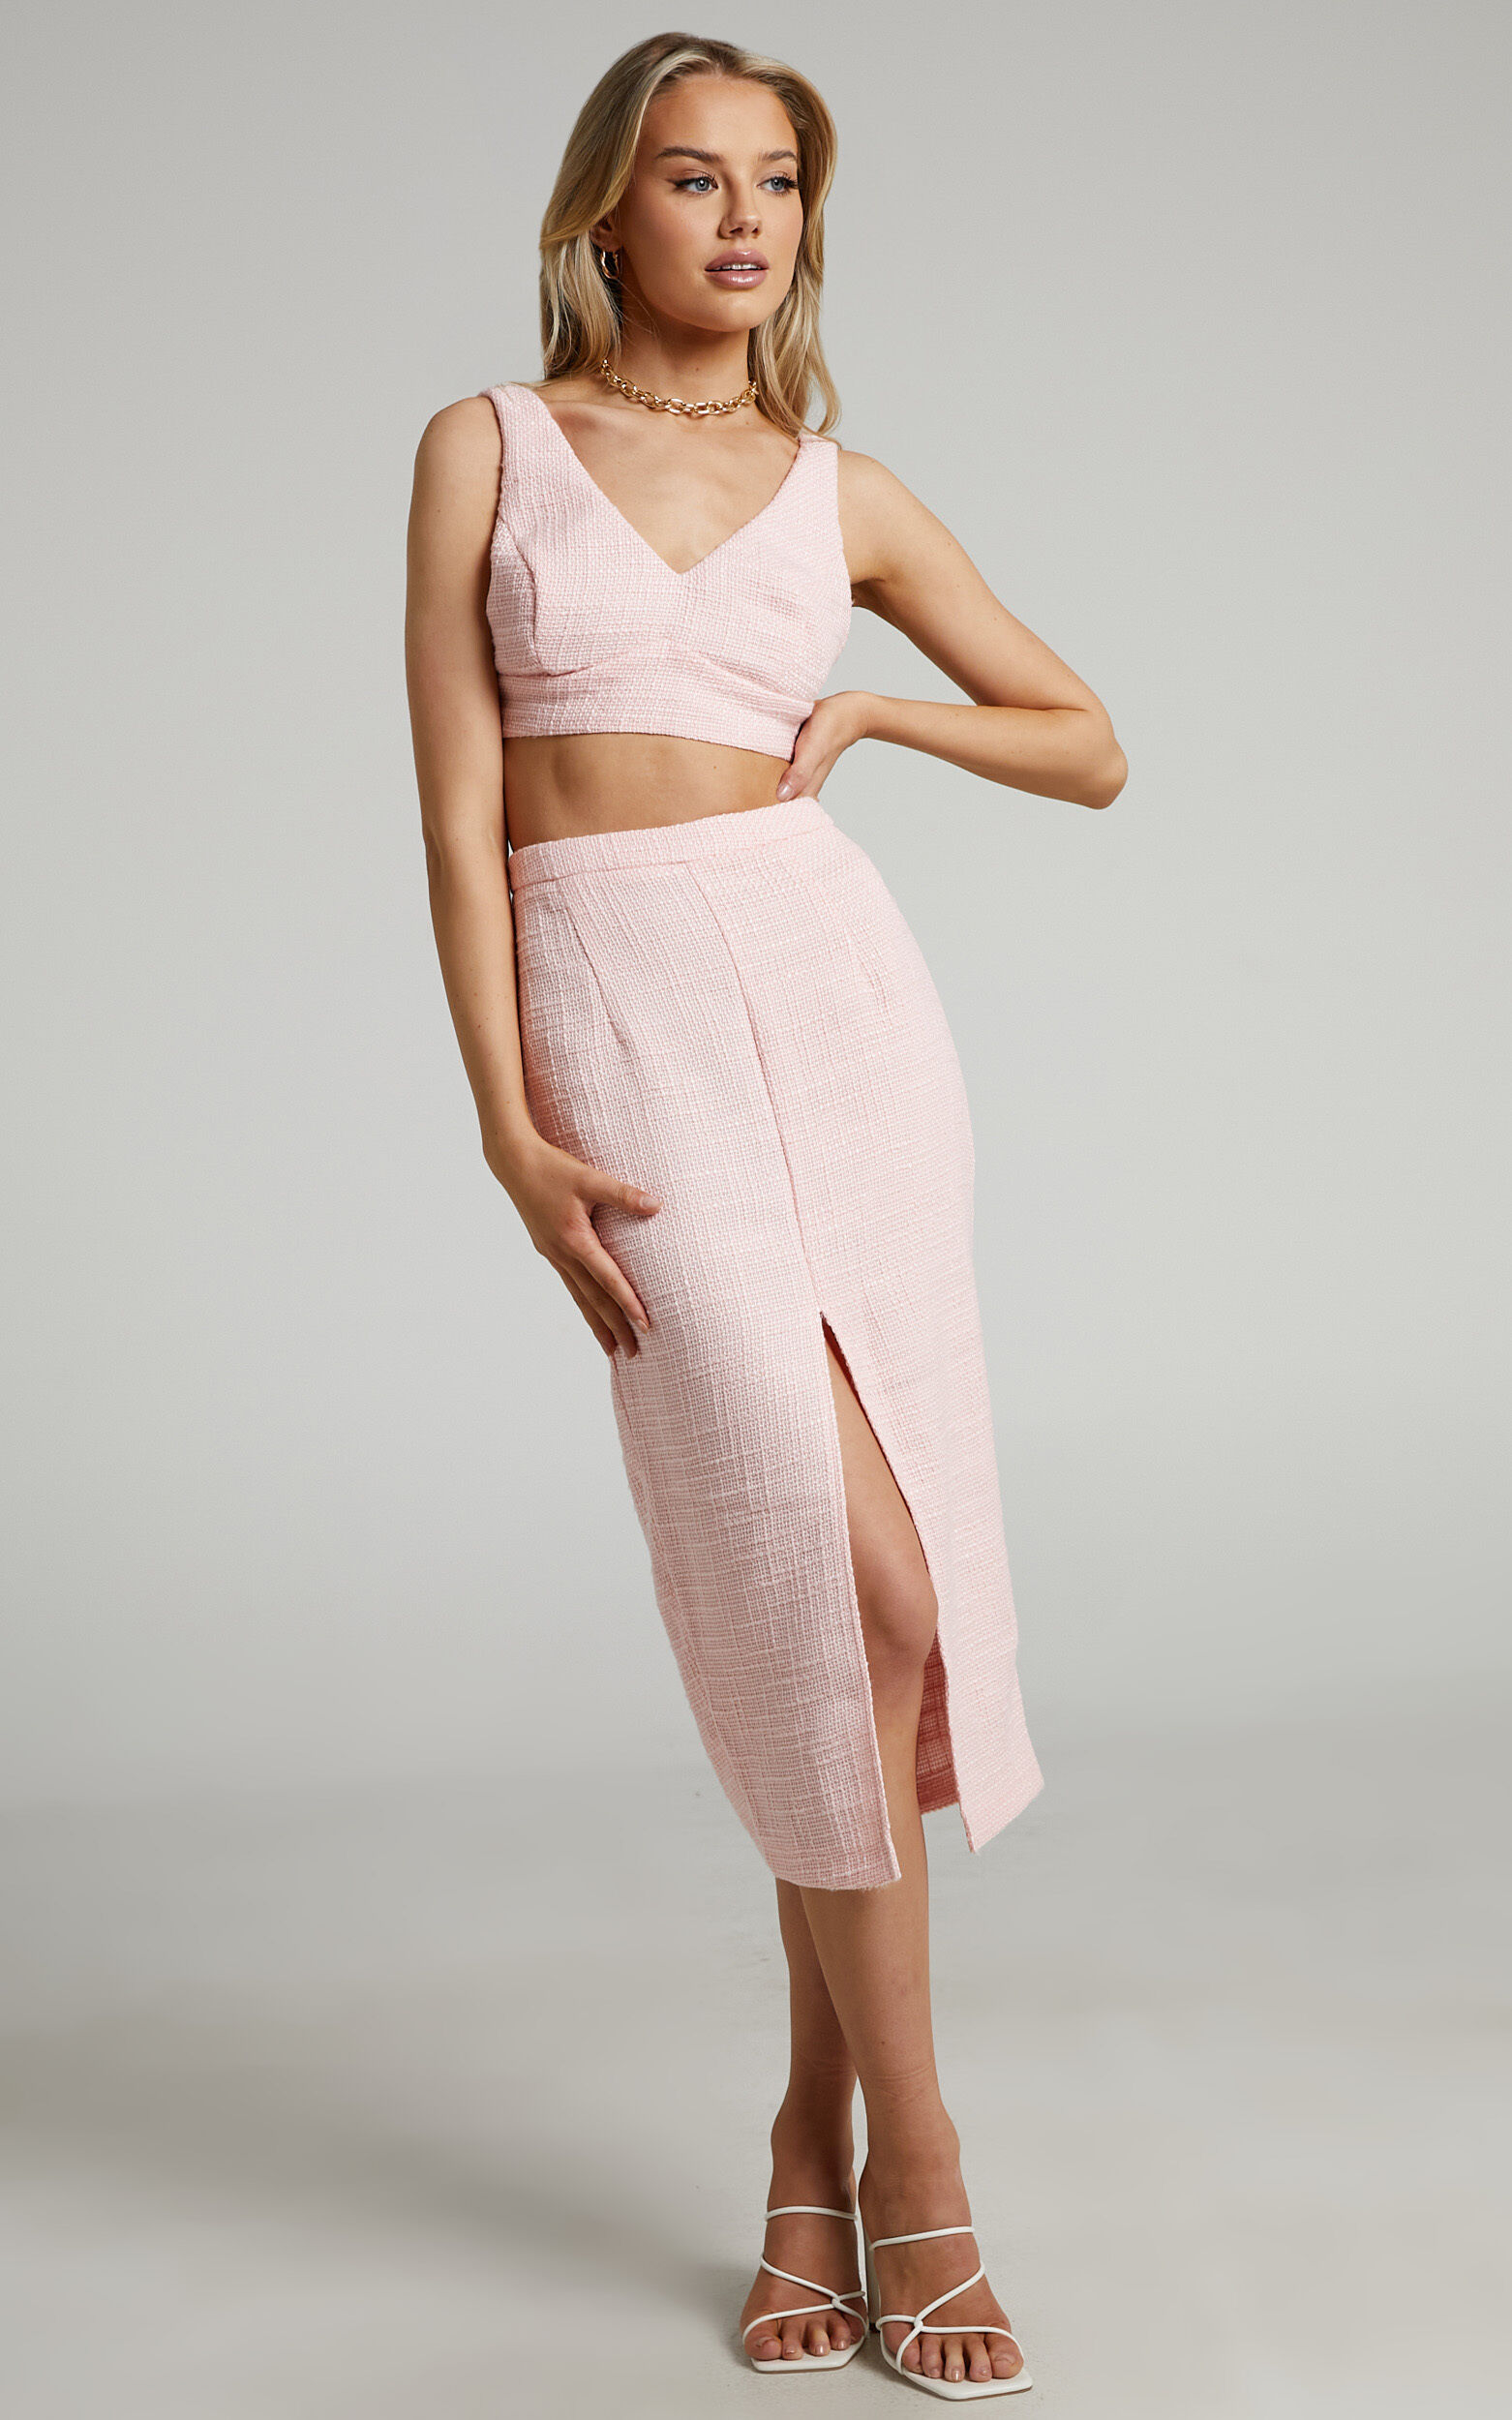 Jhessa Tweed Crop Top and Split Front Midi Skirt Two Piece Set in Pale Pink - 04, PNK1, super-hi-res image number null